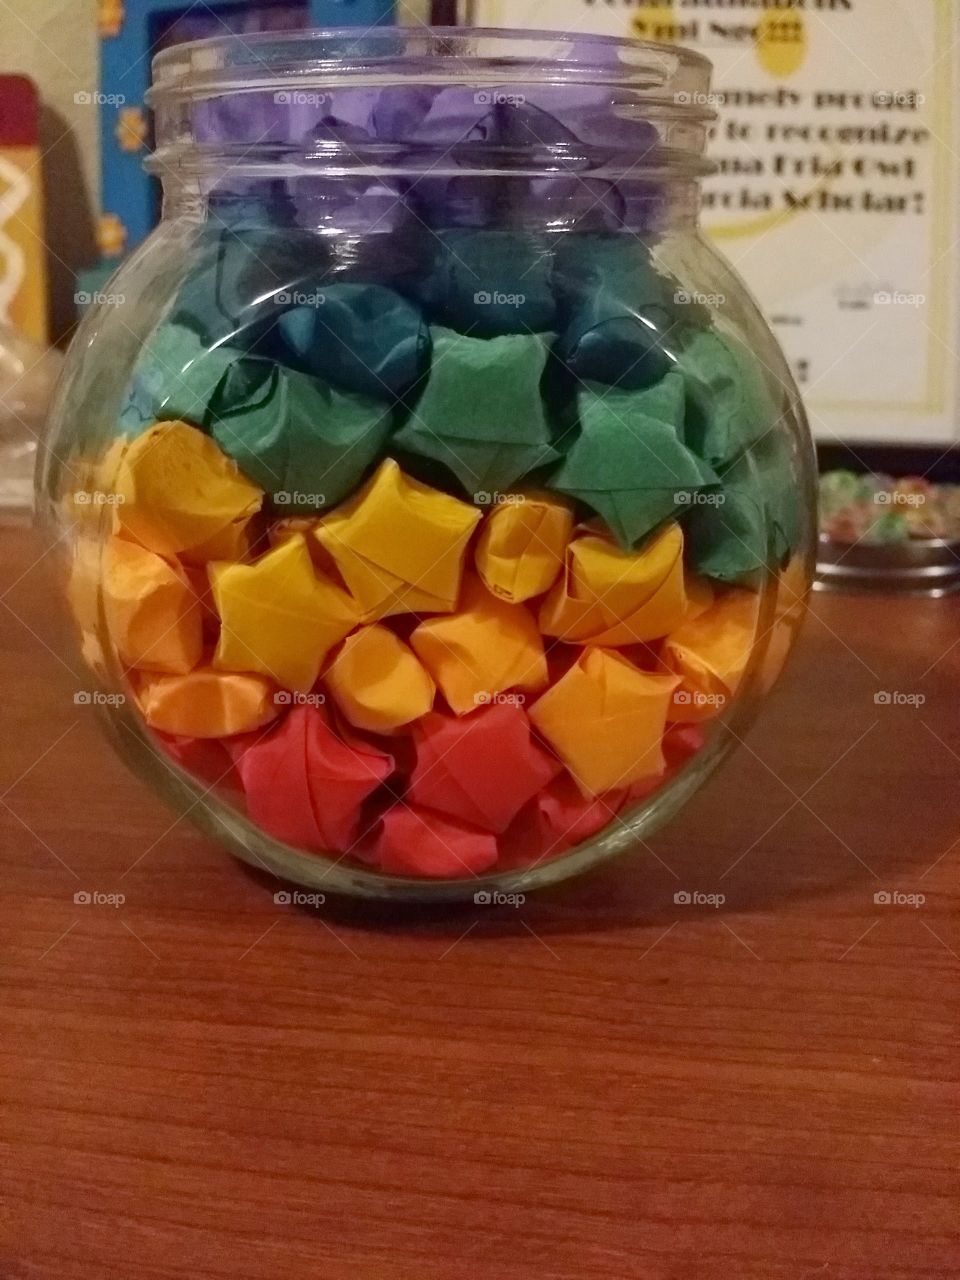 rainbow lucky stars. I love making lucky stars and decided to make a rainbow star jar